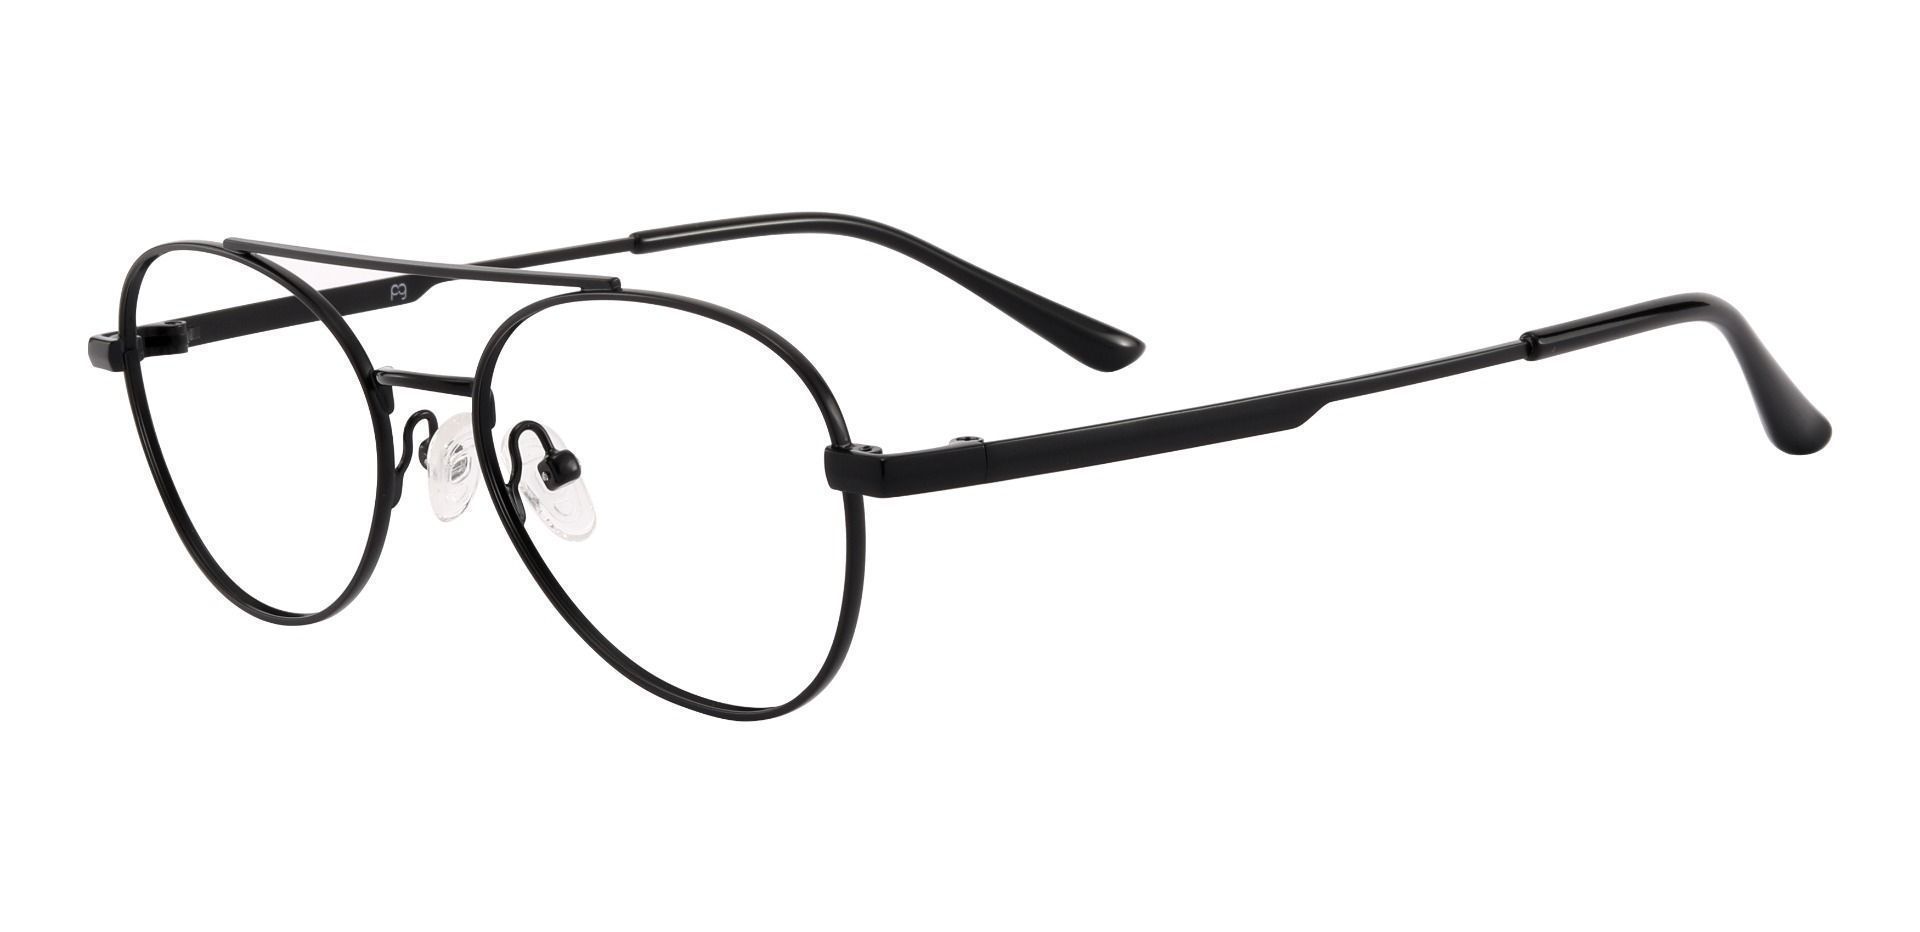 Hinton Aviator Prescription Glasses - Black